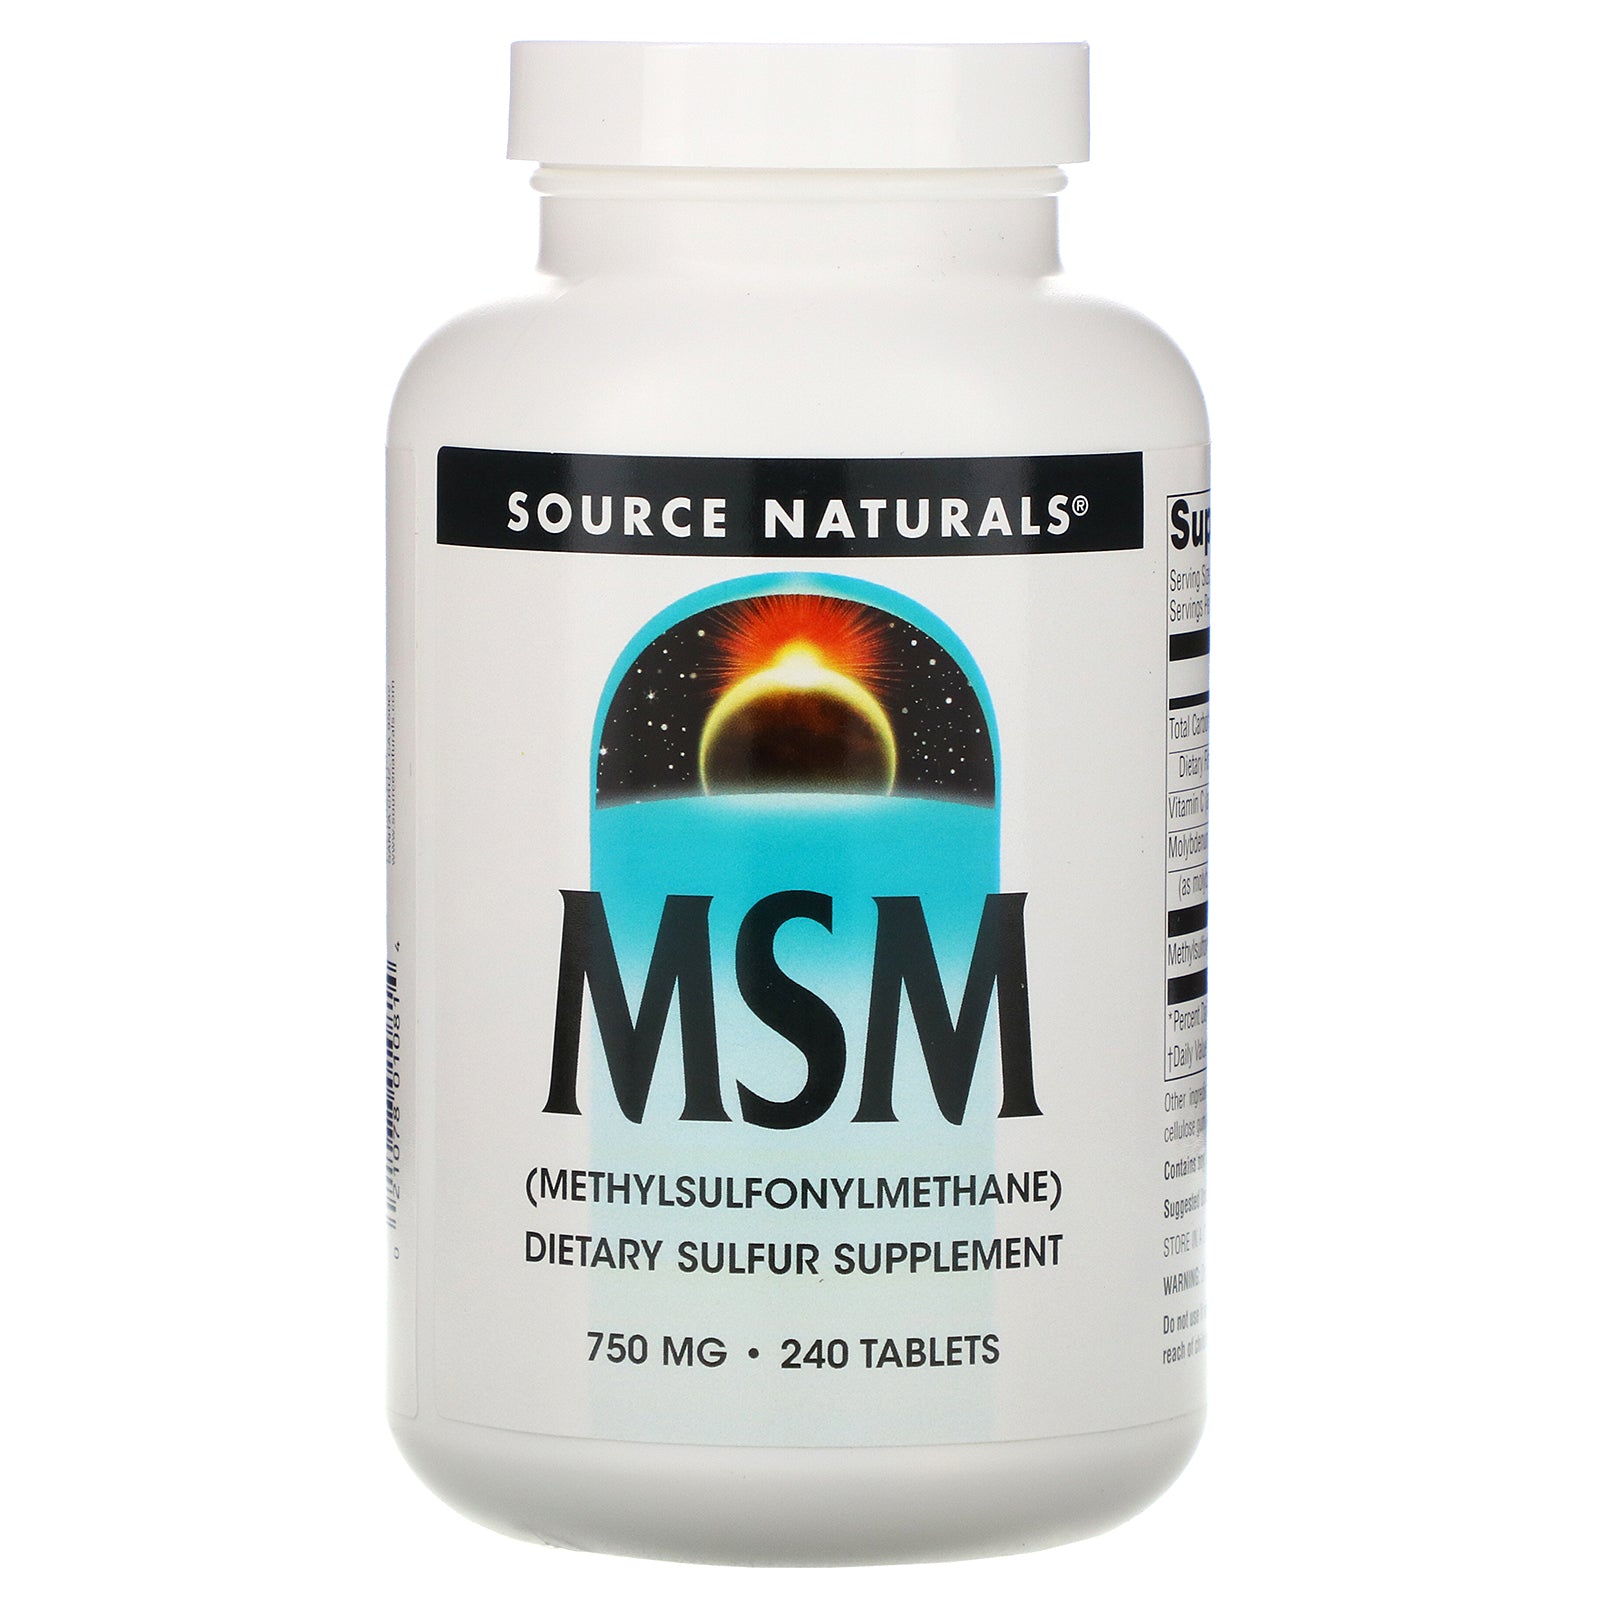 Source Naturals, MSM (Methylsulfonylmethane), 750 mg, 240 Tablets